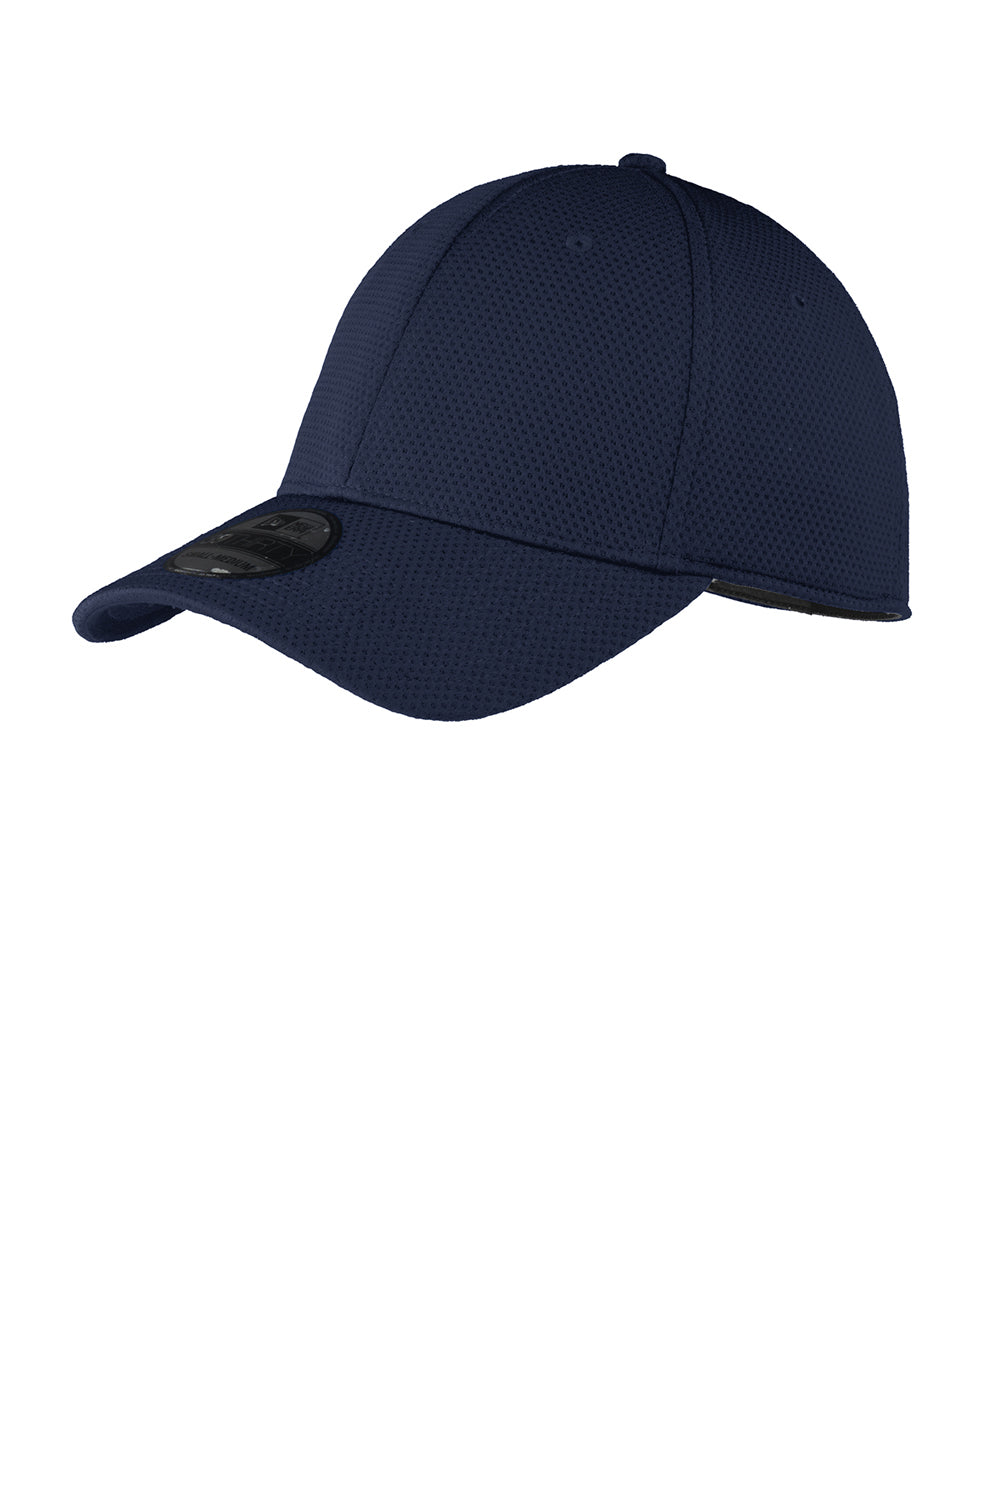 New Era Mens Moisture Wicking Stretch Fit Hat - Navy Blue